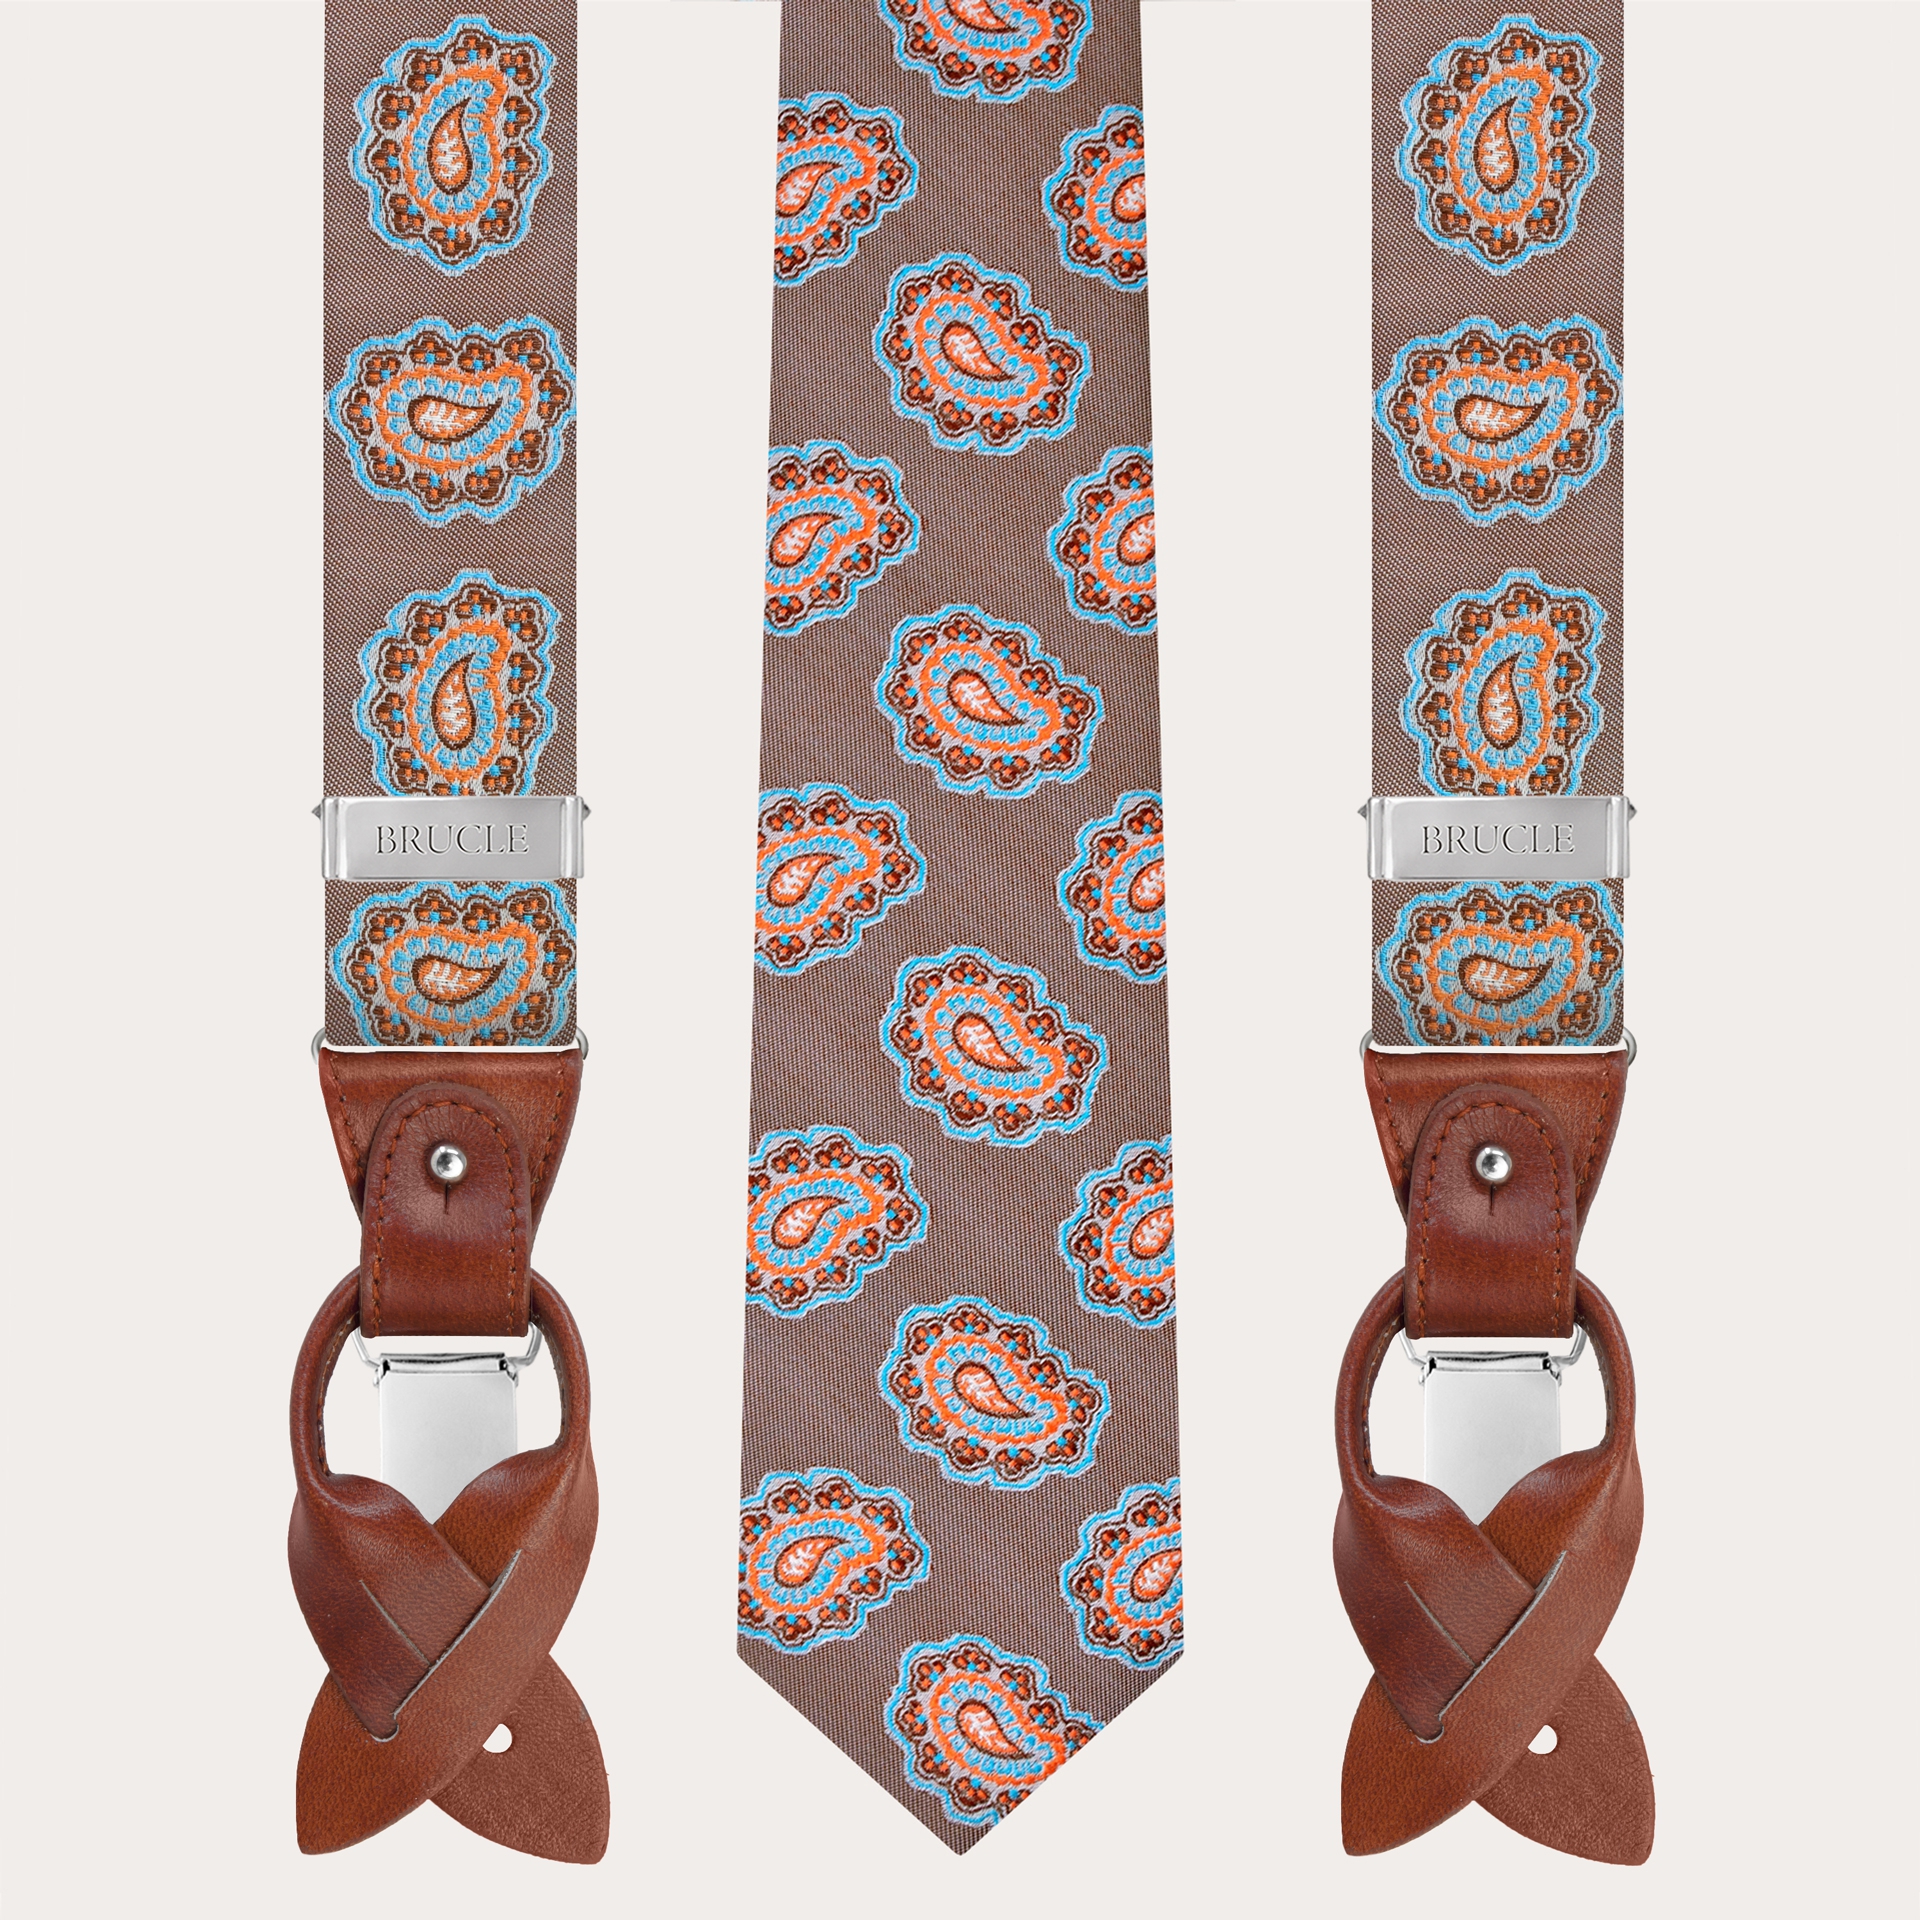 BRUCLE Abgestimmte Hosenträger und Krawatte aus Seide, taubengrau paisley